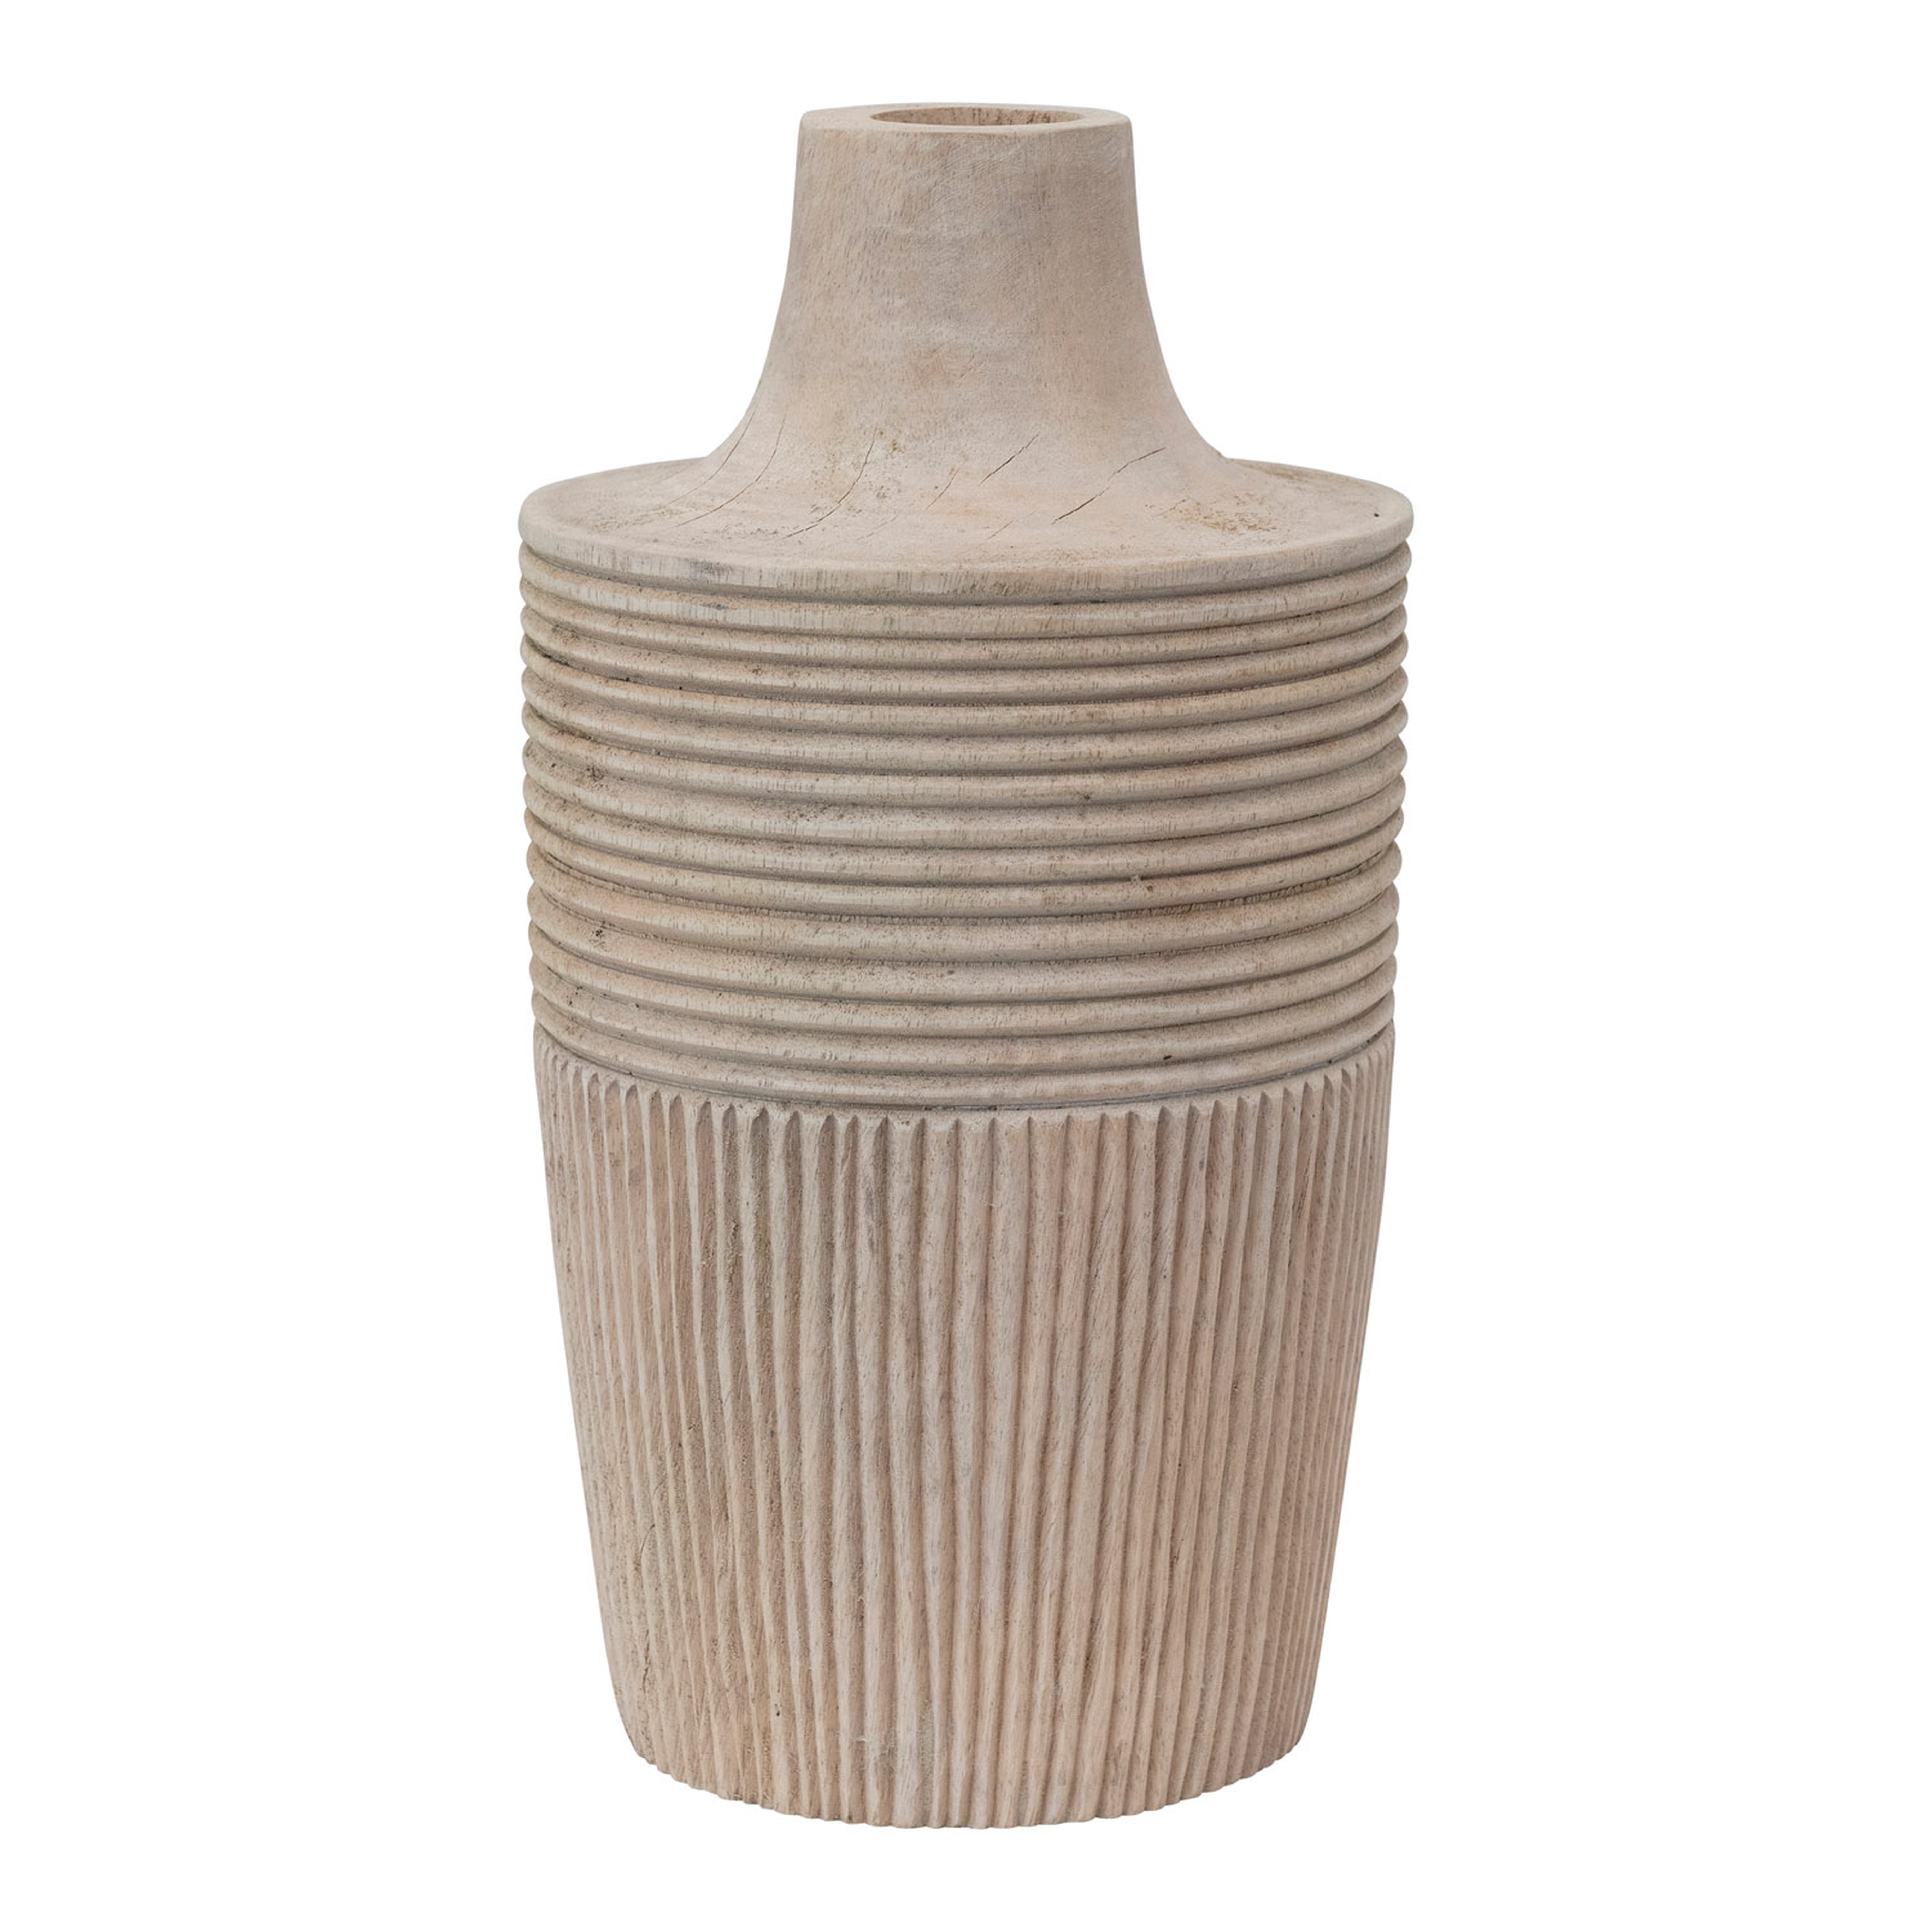 Decorative Hand-Carved Mango Wood Vase - Moss & Wilder